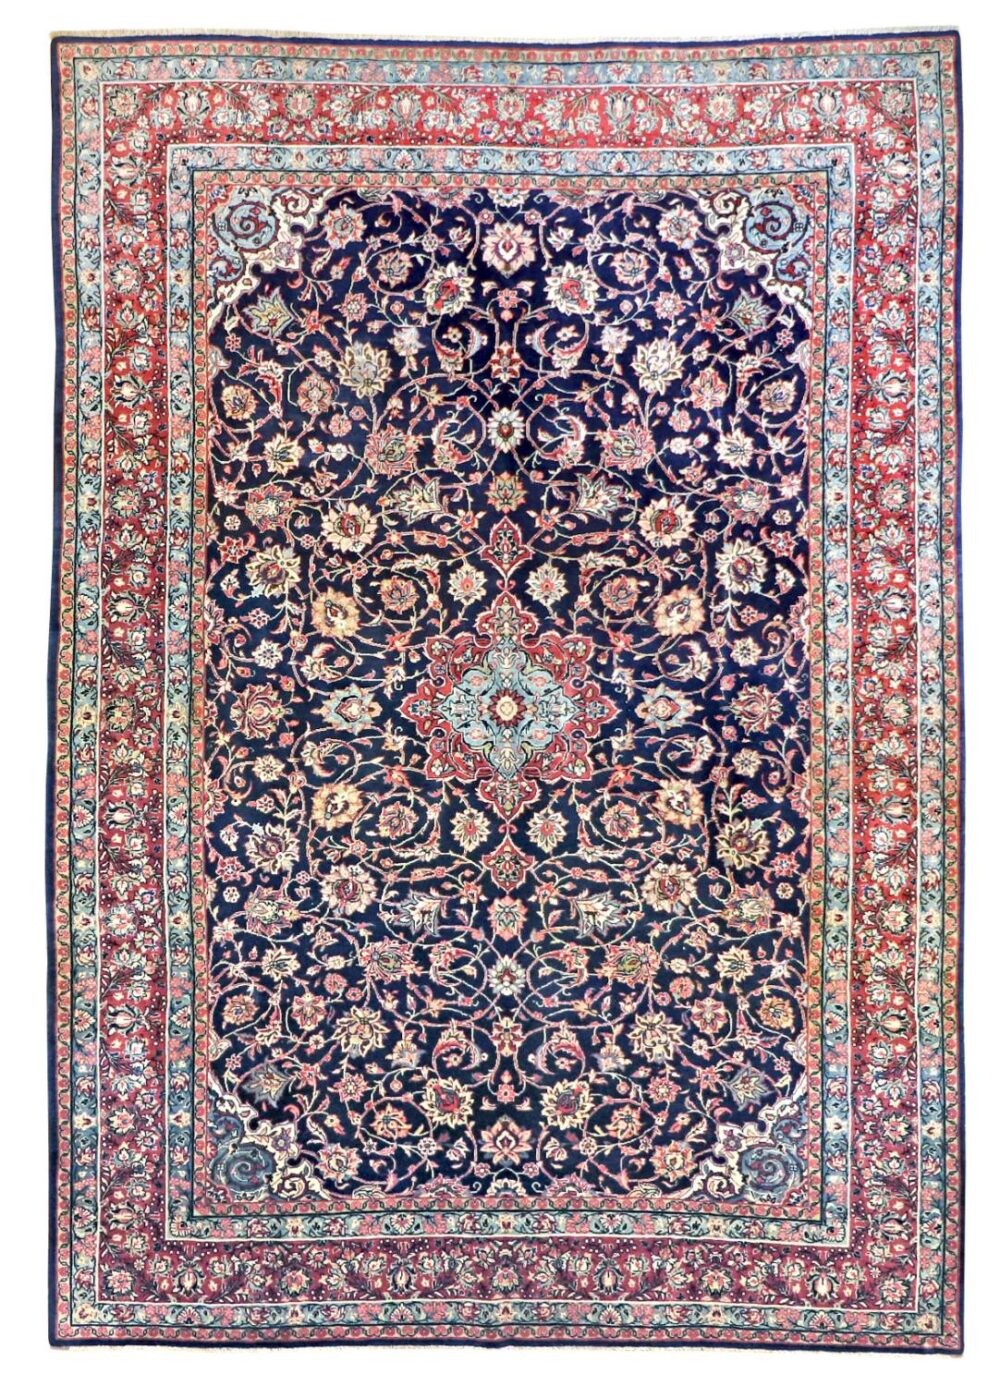 8 x 11 Vintage Sarouk Persian Wool Area Rug - pineville rug gallery - charlotte nc